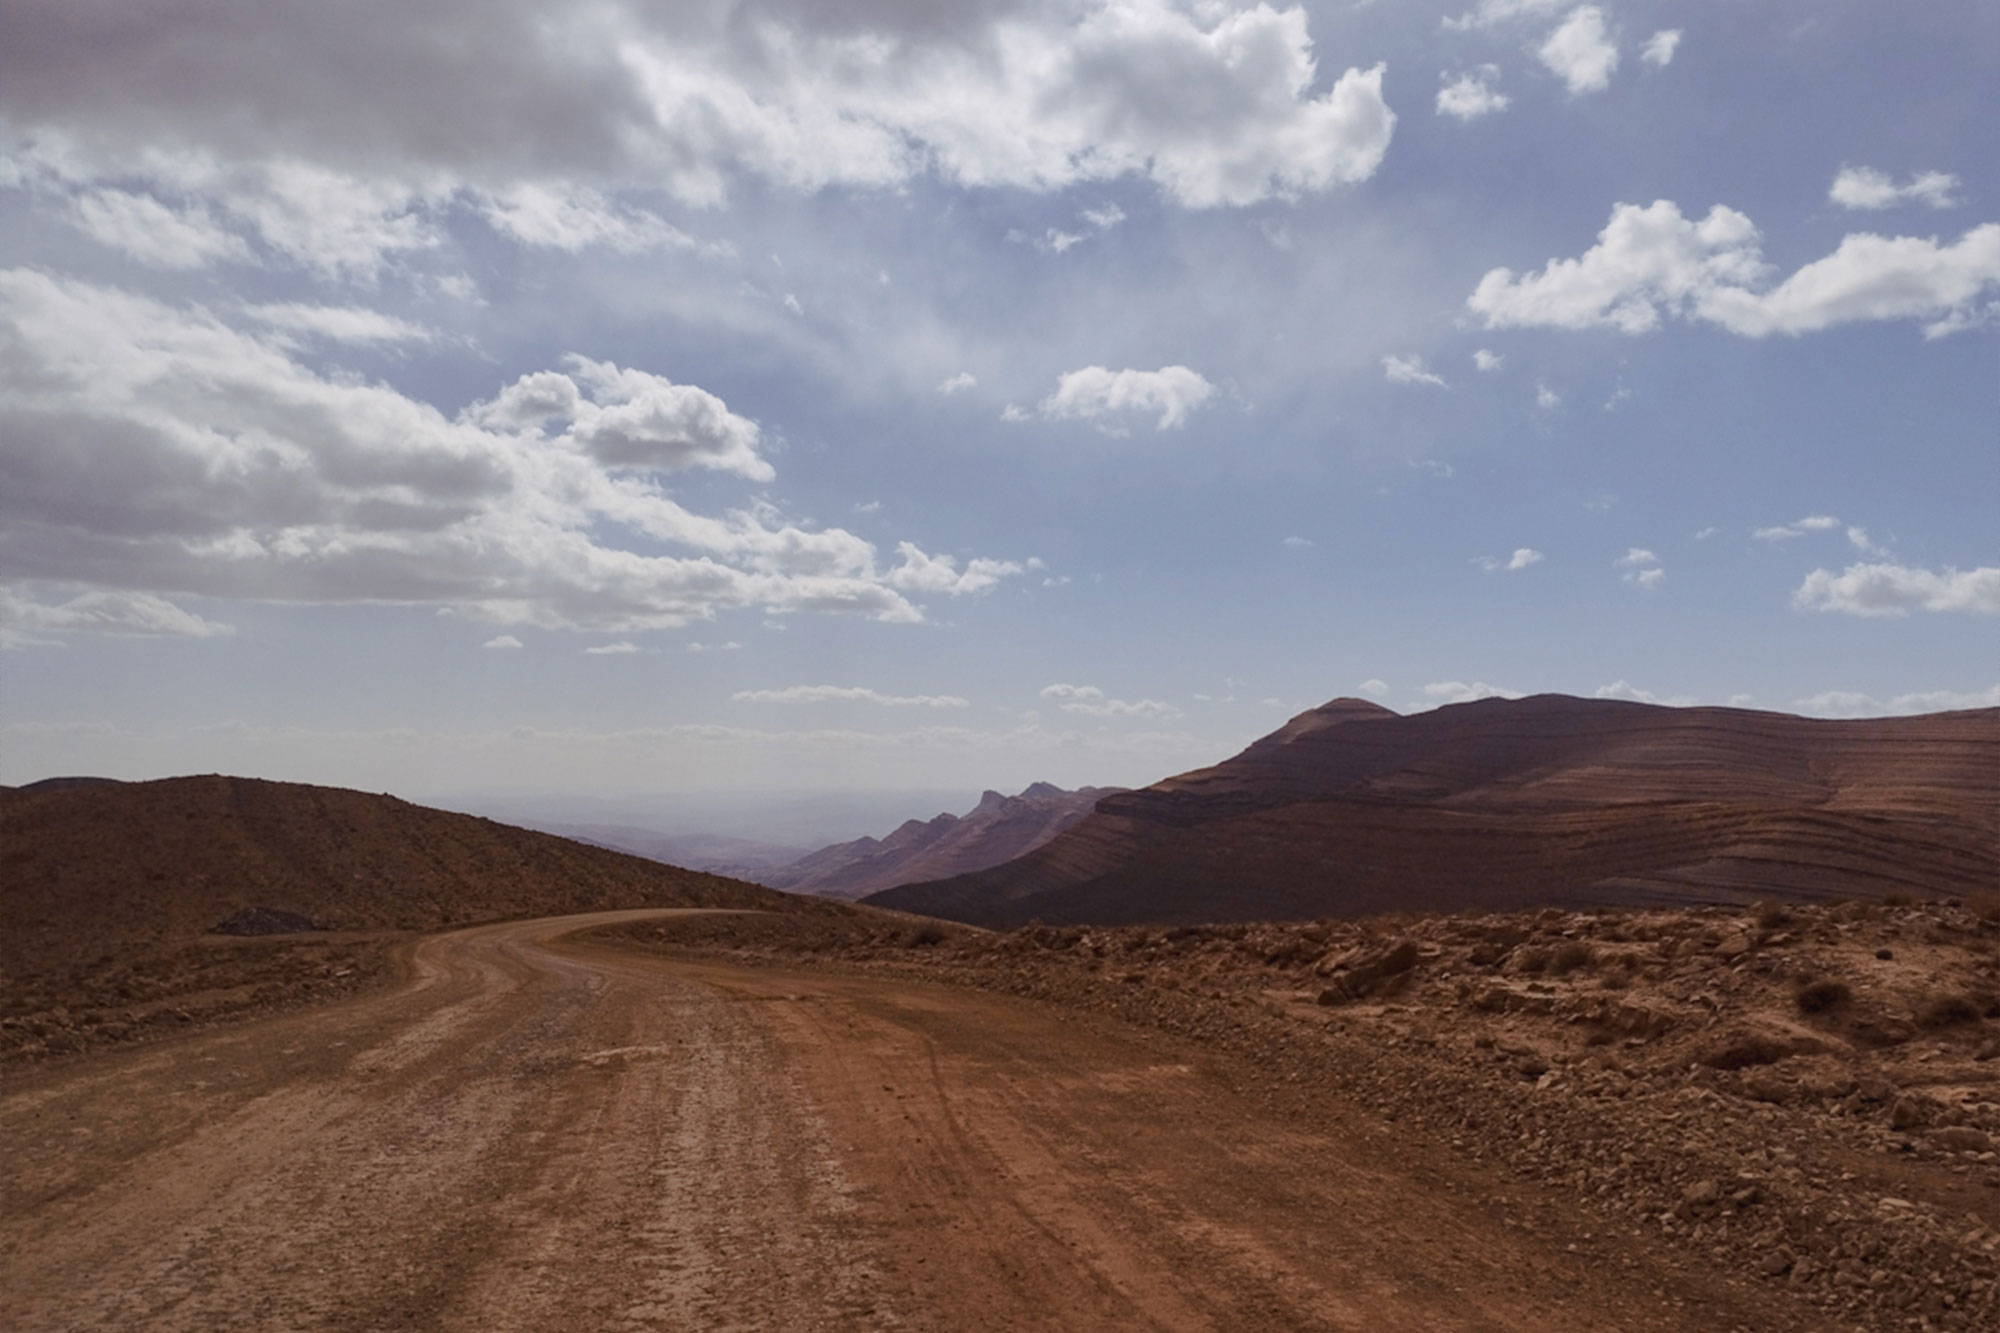 Desert road through mountains